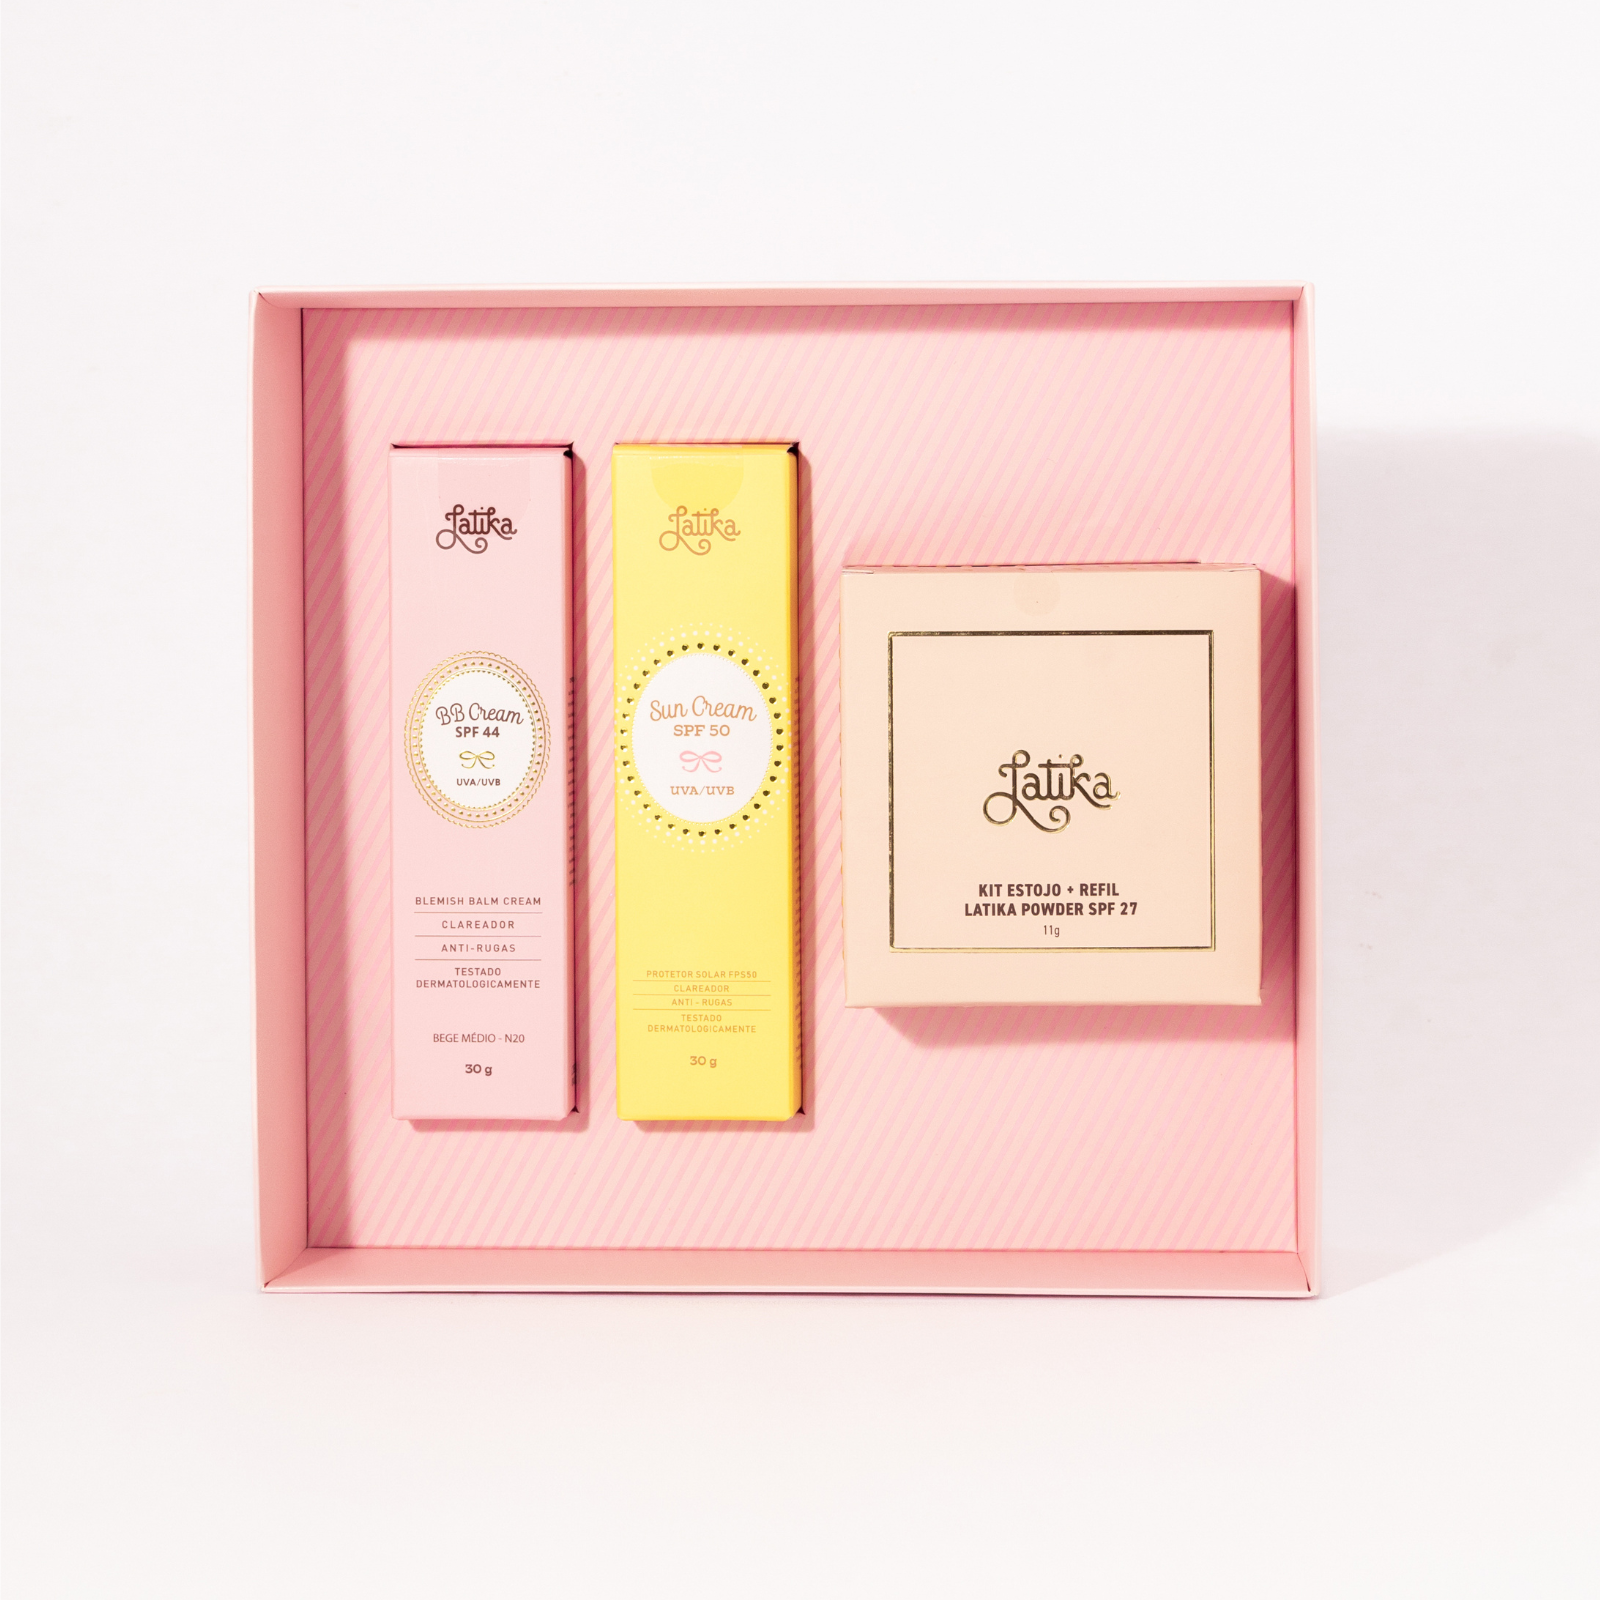 Sweet Box Pele Perfeita - BB Cream + Sun Cream + Kit Powder